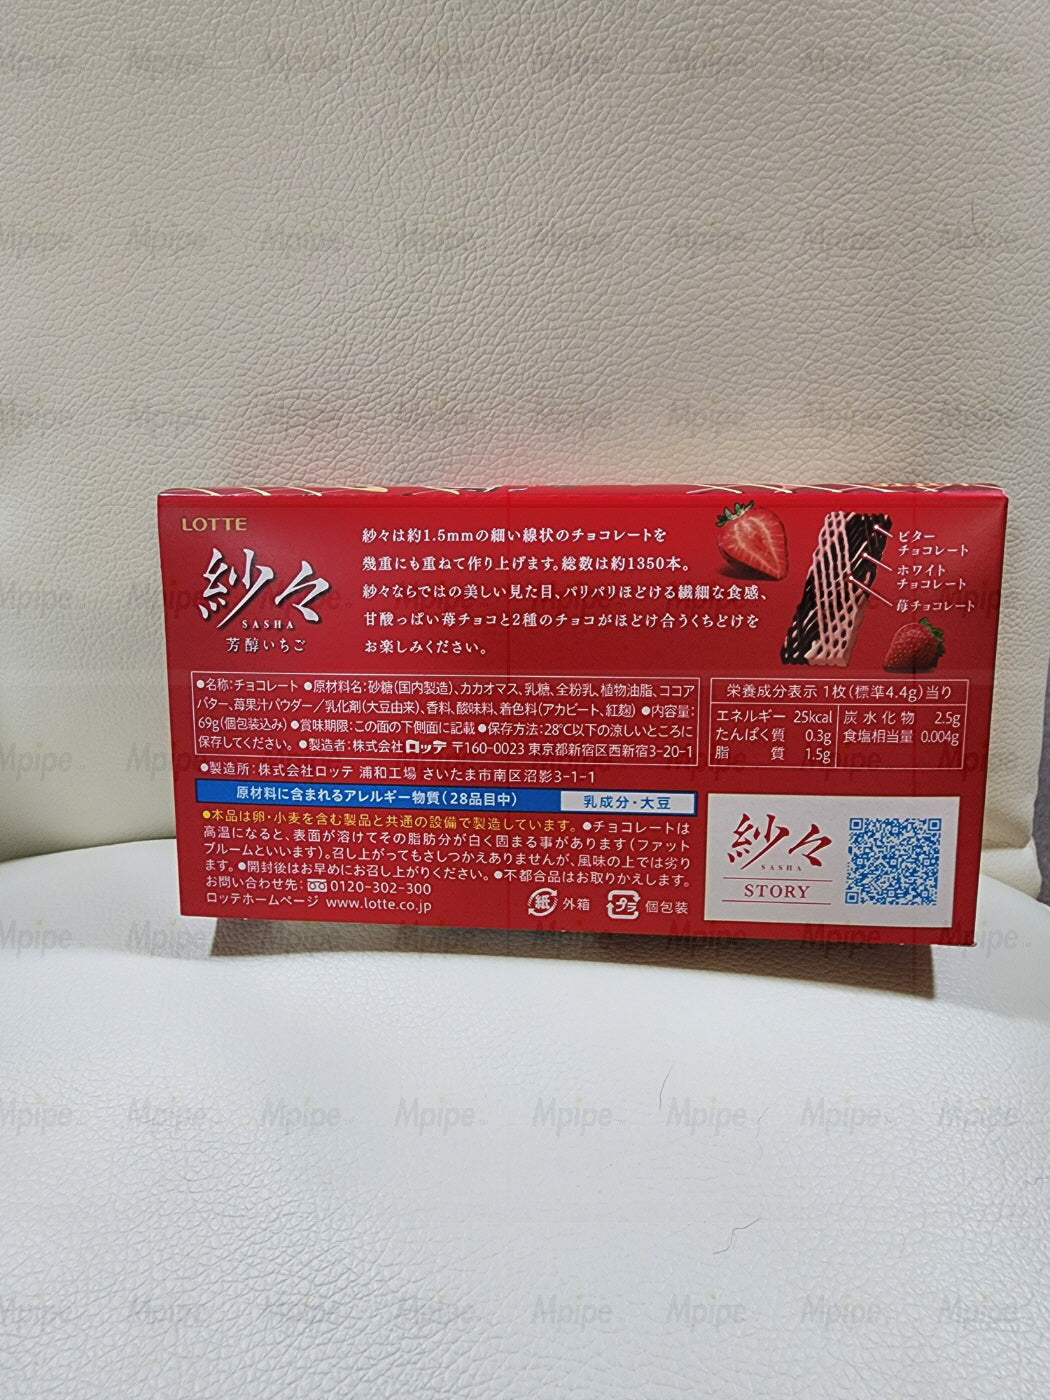 JF0703 식품 (롯데 샤샤 초콜릿 - 딸기)